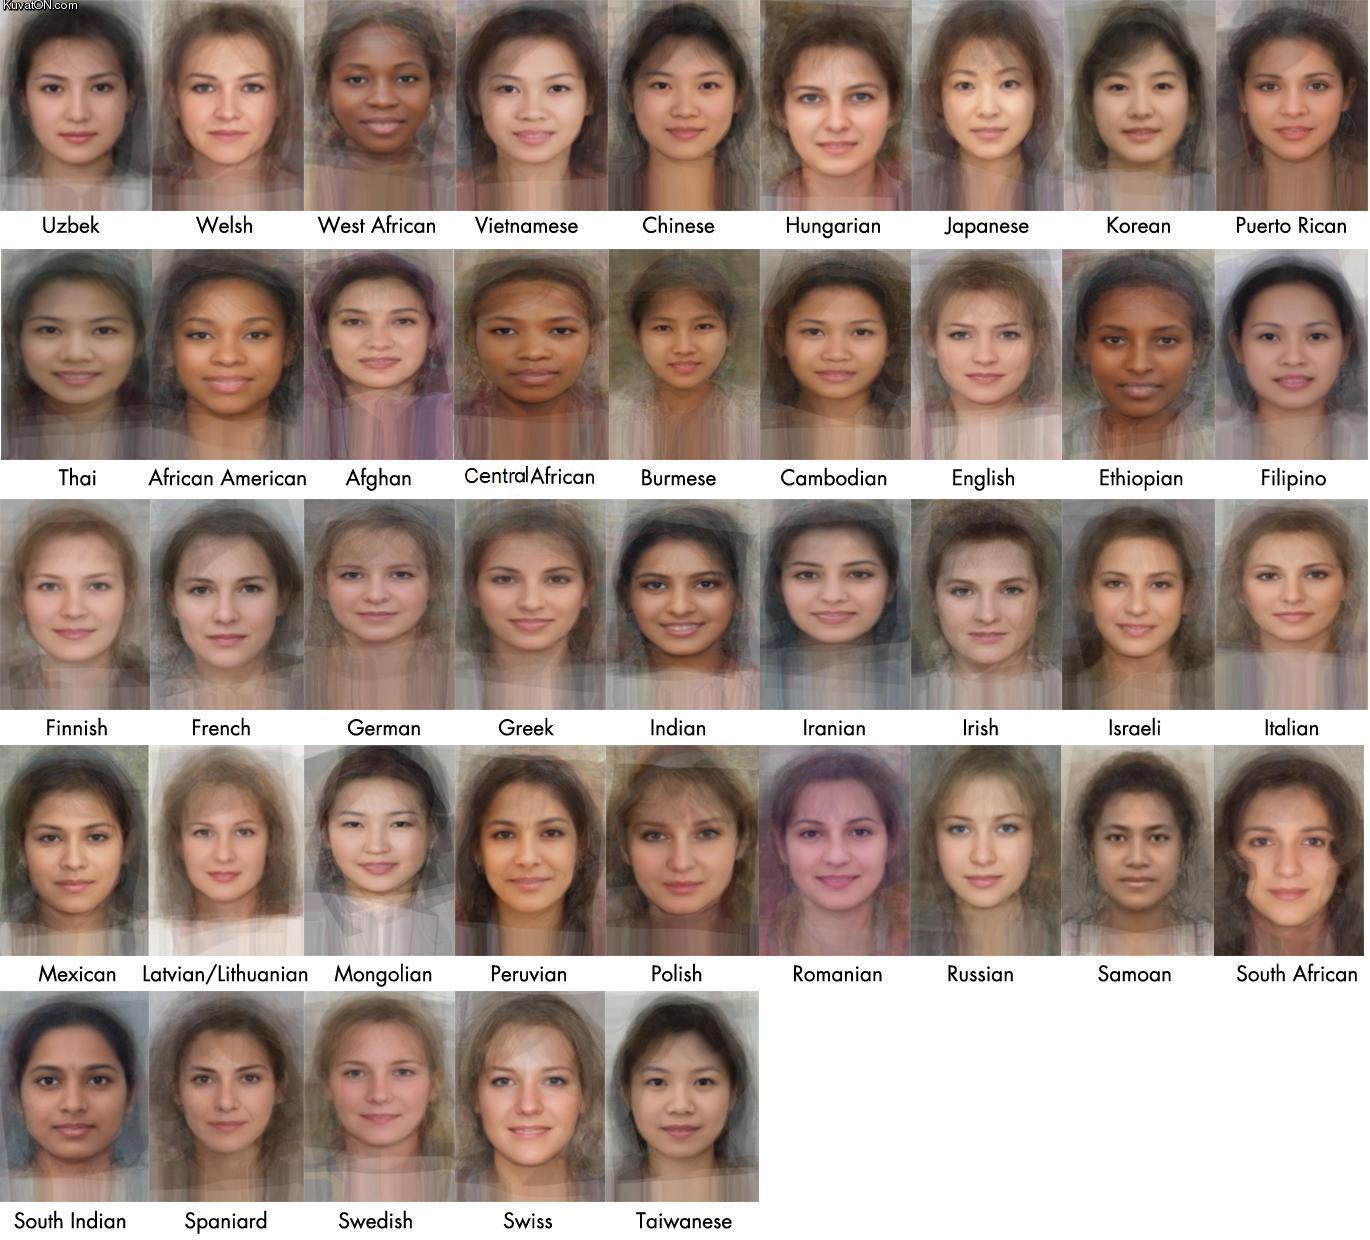 average_faces.jpg